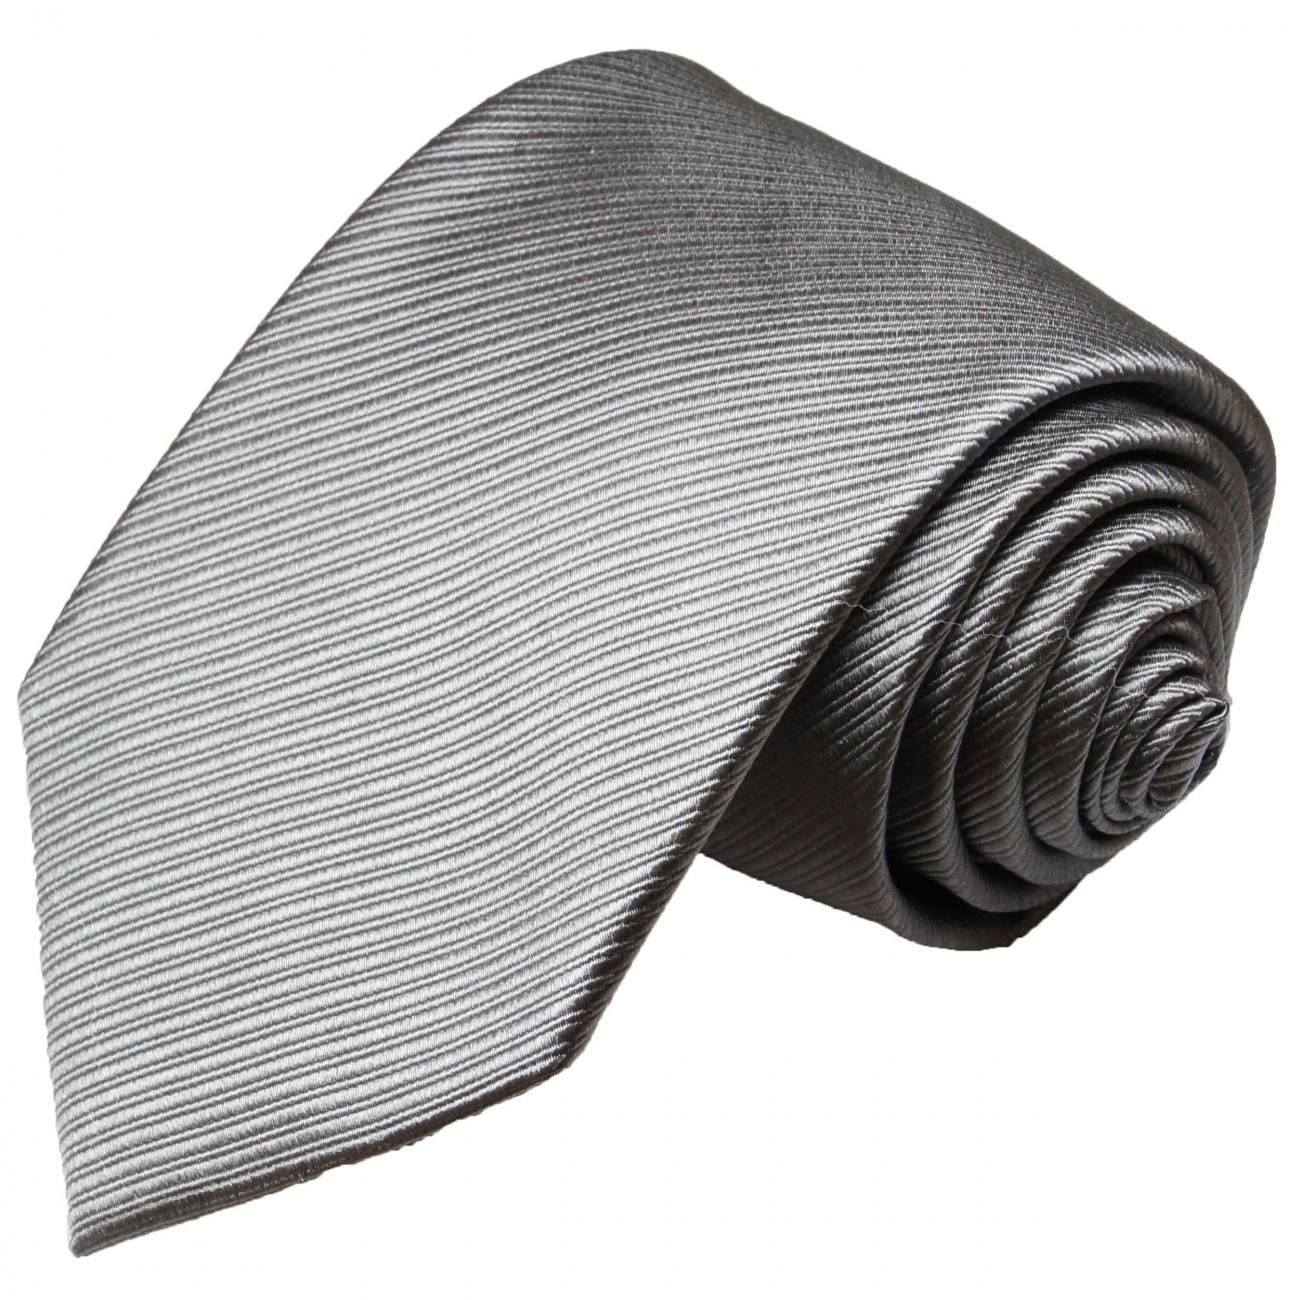 Krawatte silber 977 uni BESTELLEN Malone grau JETZT | Shop - Paul